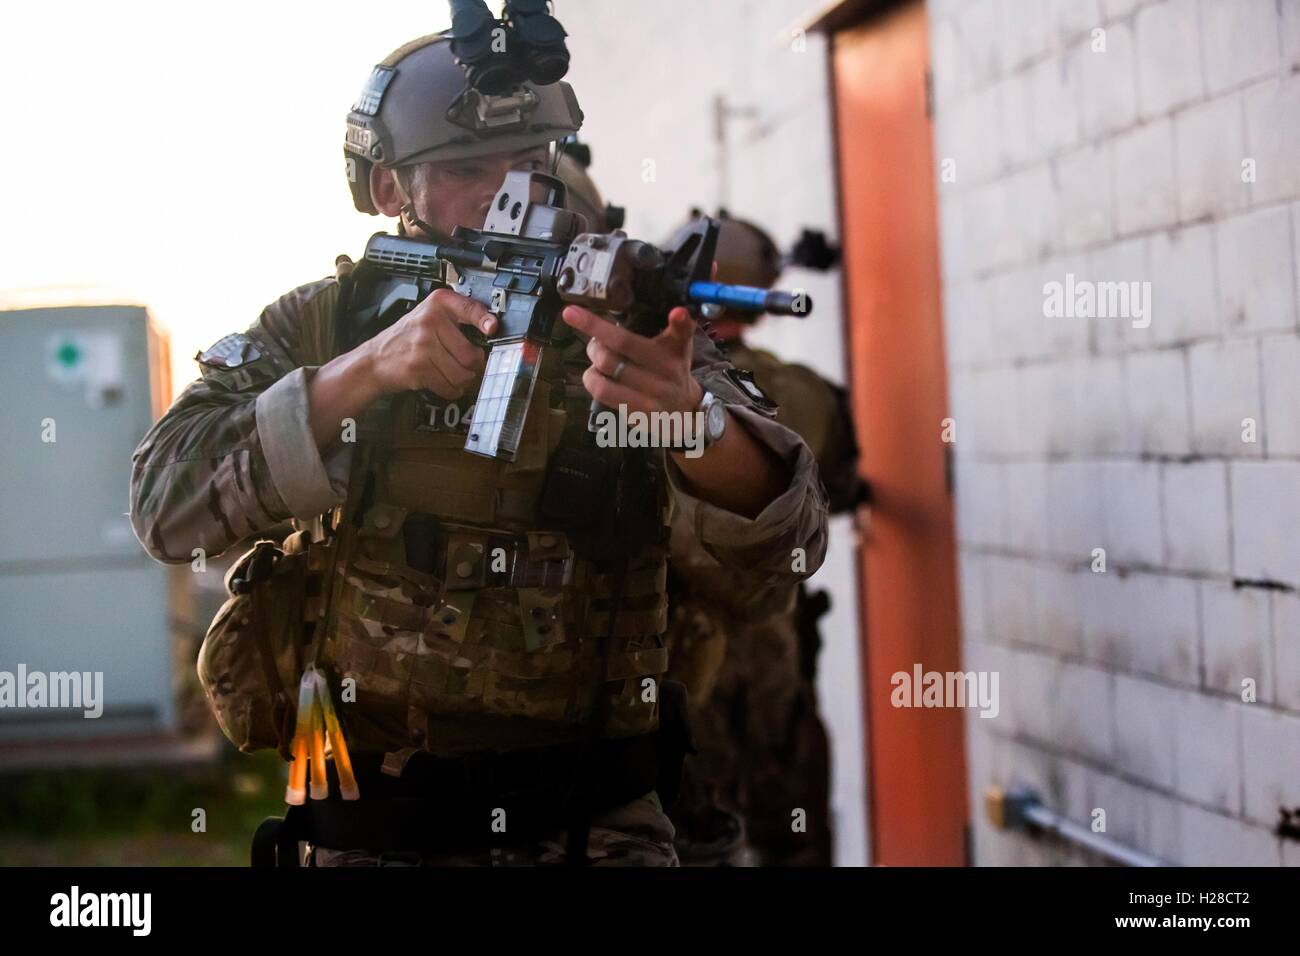 U.S. Army Green Beret commandos during infiltration training April 2, 2015 in Okaloosa Island, Florida. Stock Photo